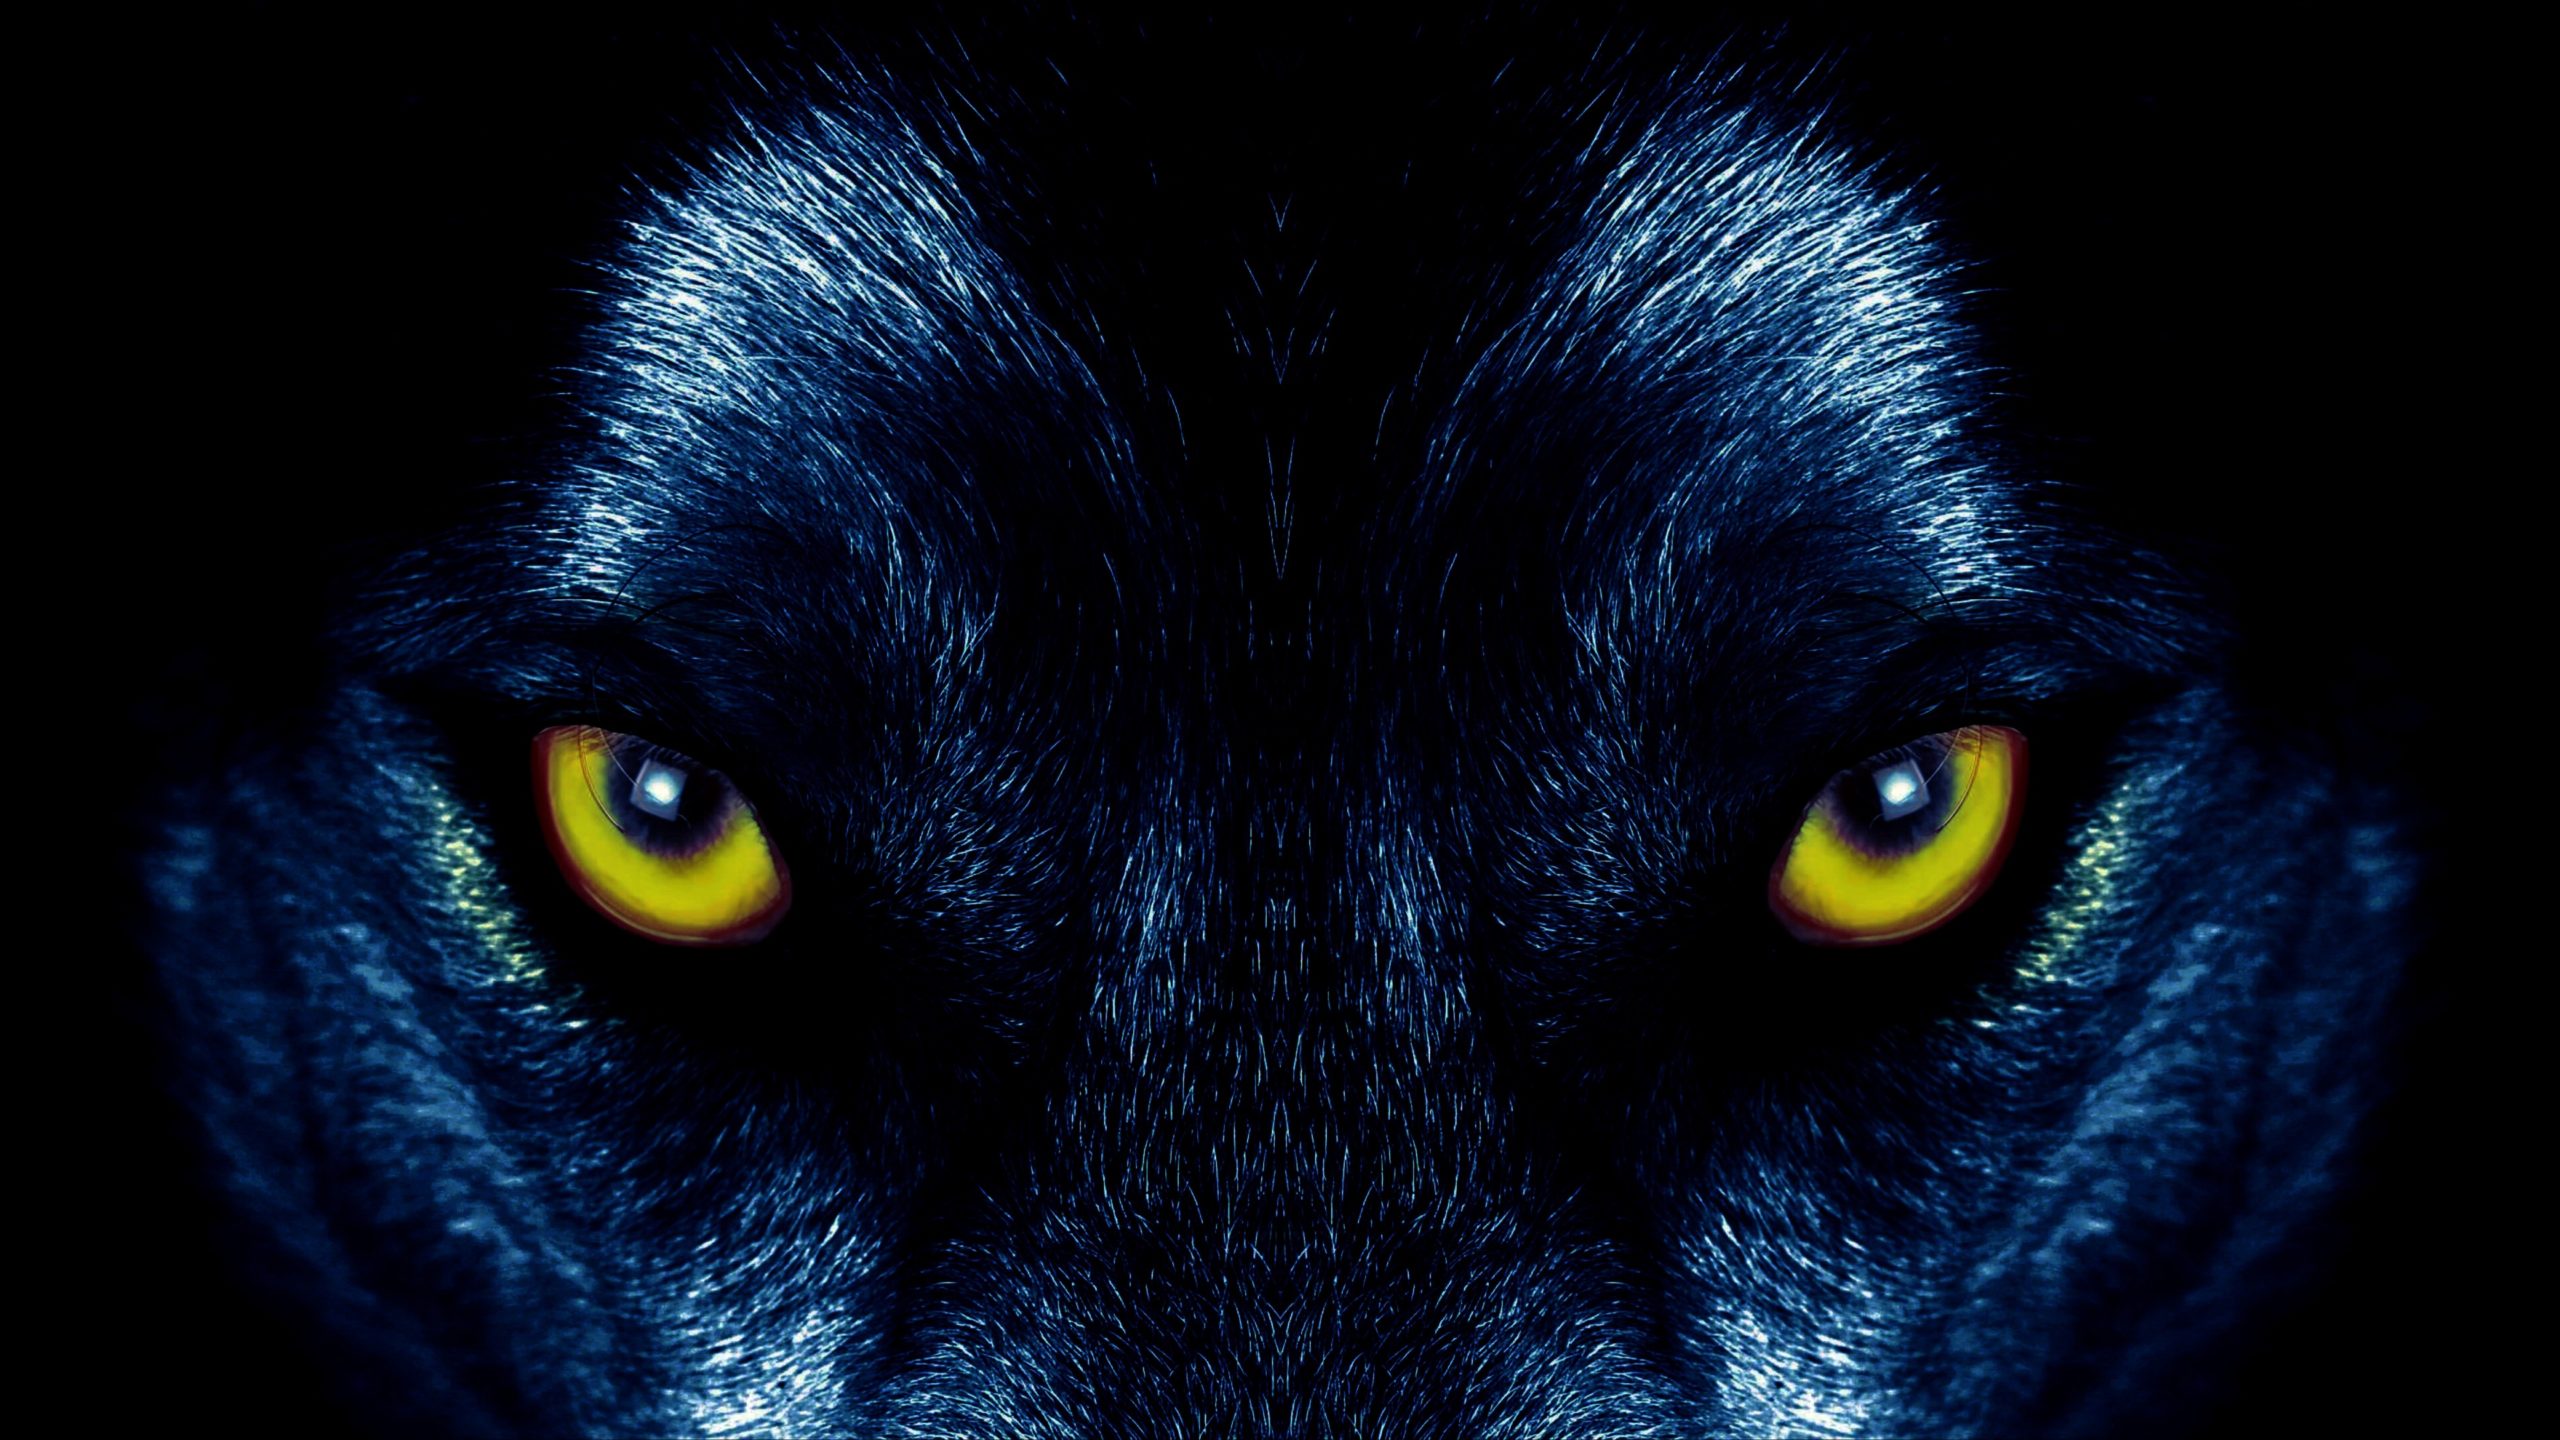 Image of Wolf's eyes